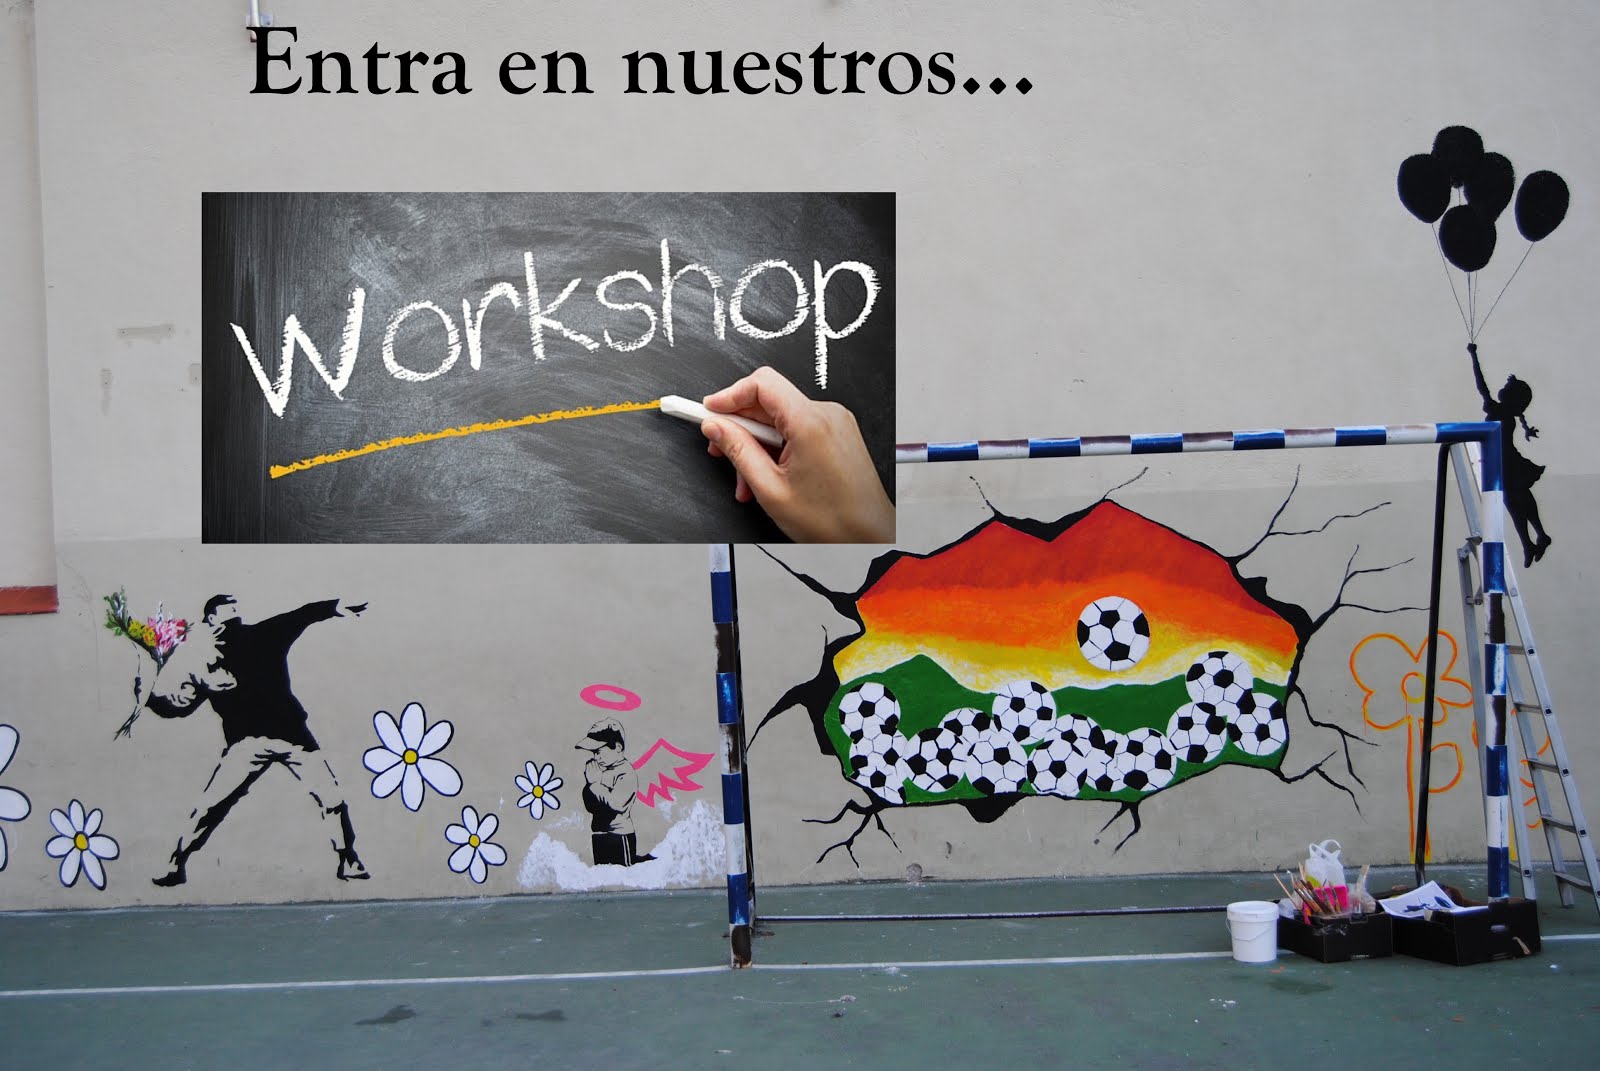 workshop